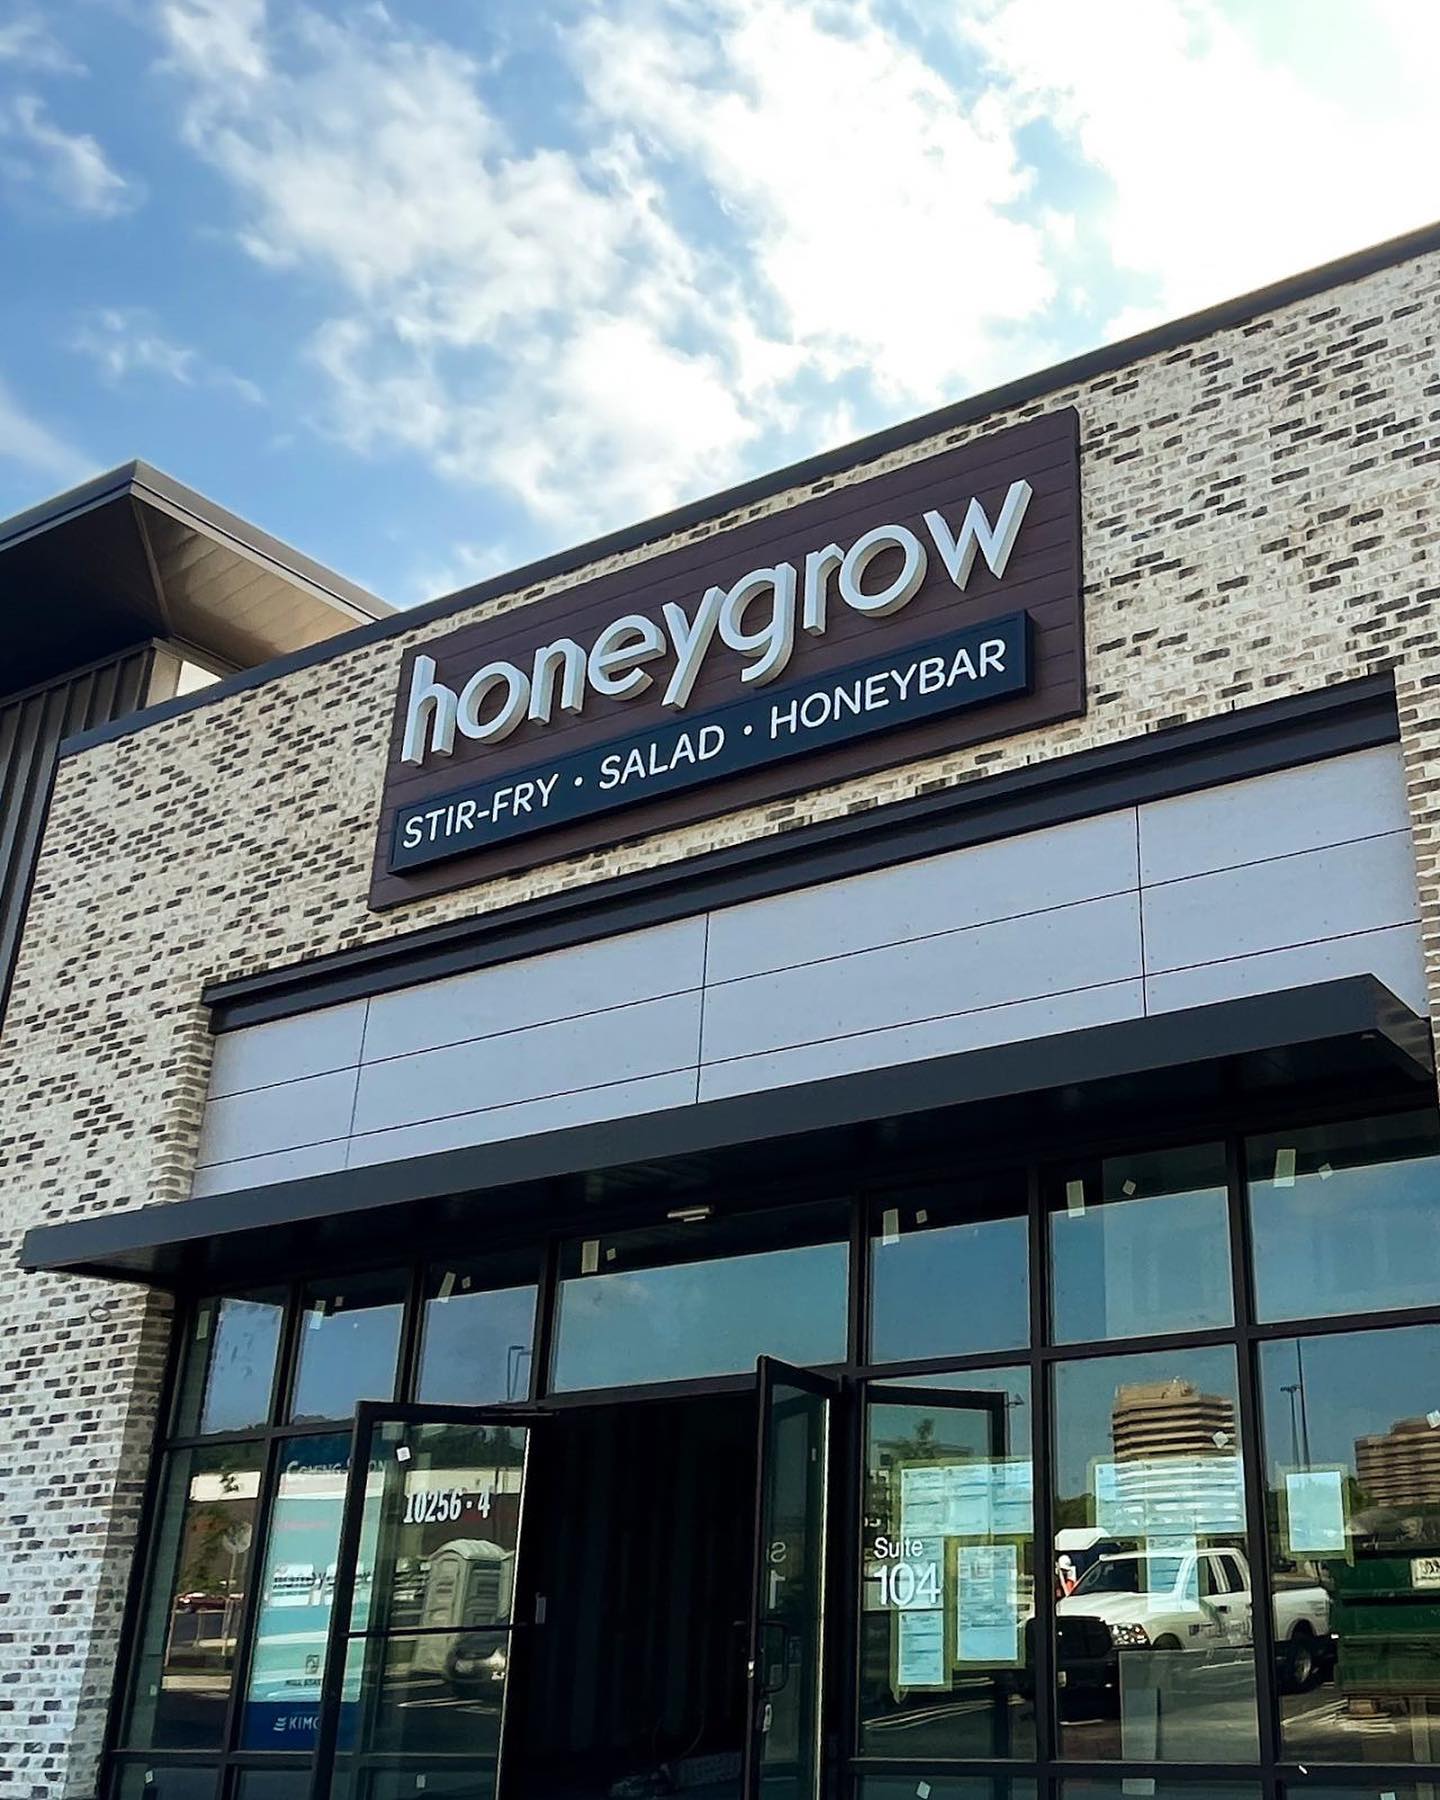 honeygrow location - honeygrow brand